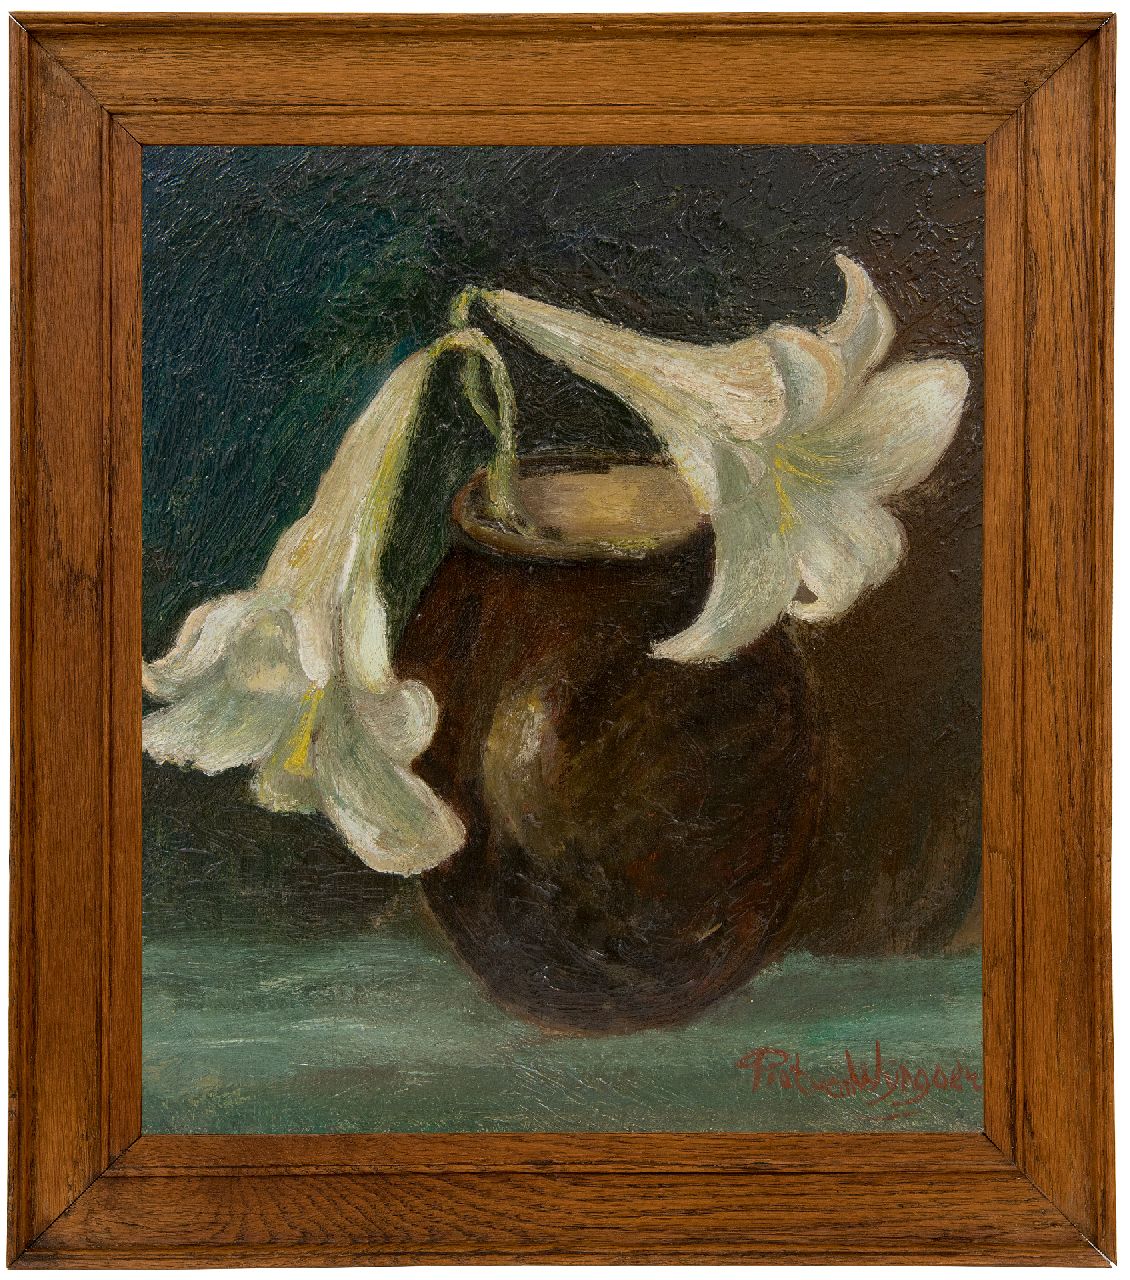 Wijngaerdt P.T. van | Petrus Theodorus 'Piet' van Wijngaerdt | Paintings offered for sale | Lily branch in a vase, oil on panel 35.1 x 32.4 cm, signed l.r.